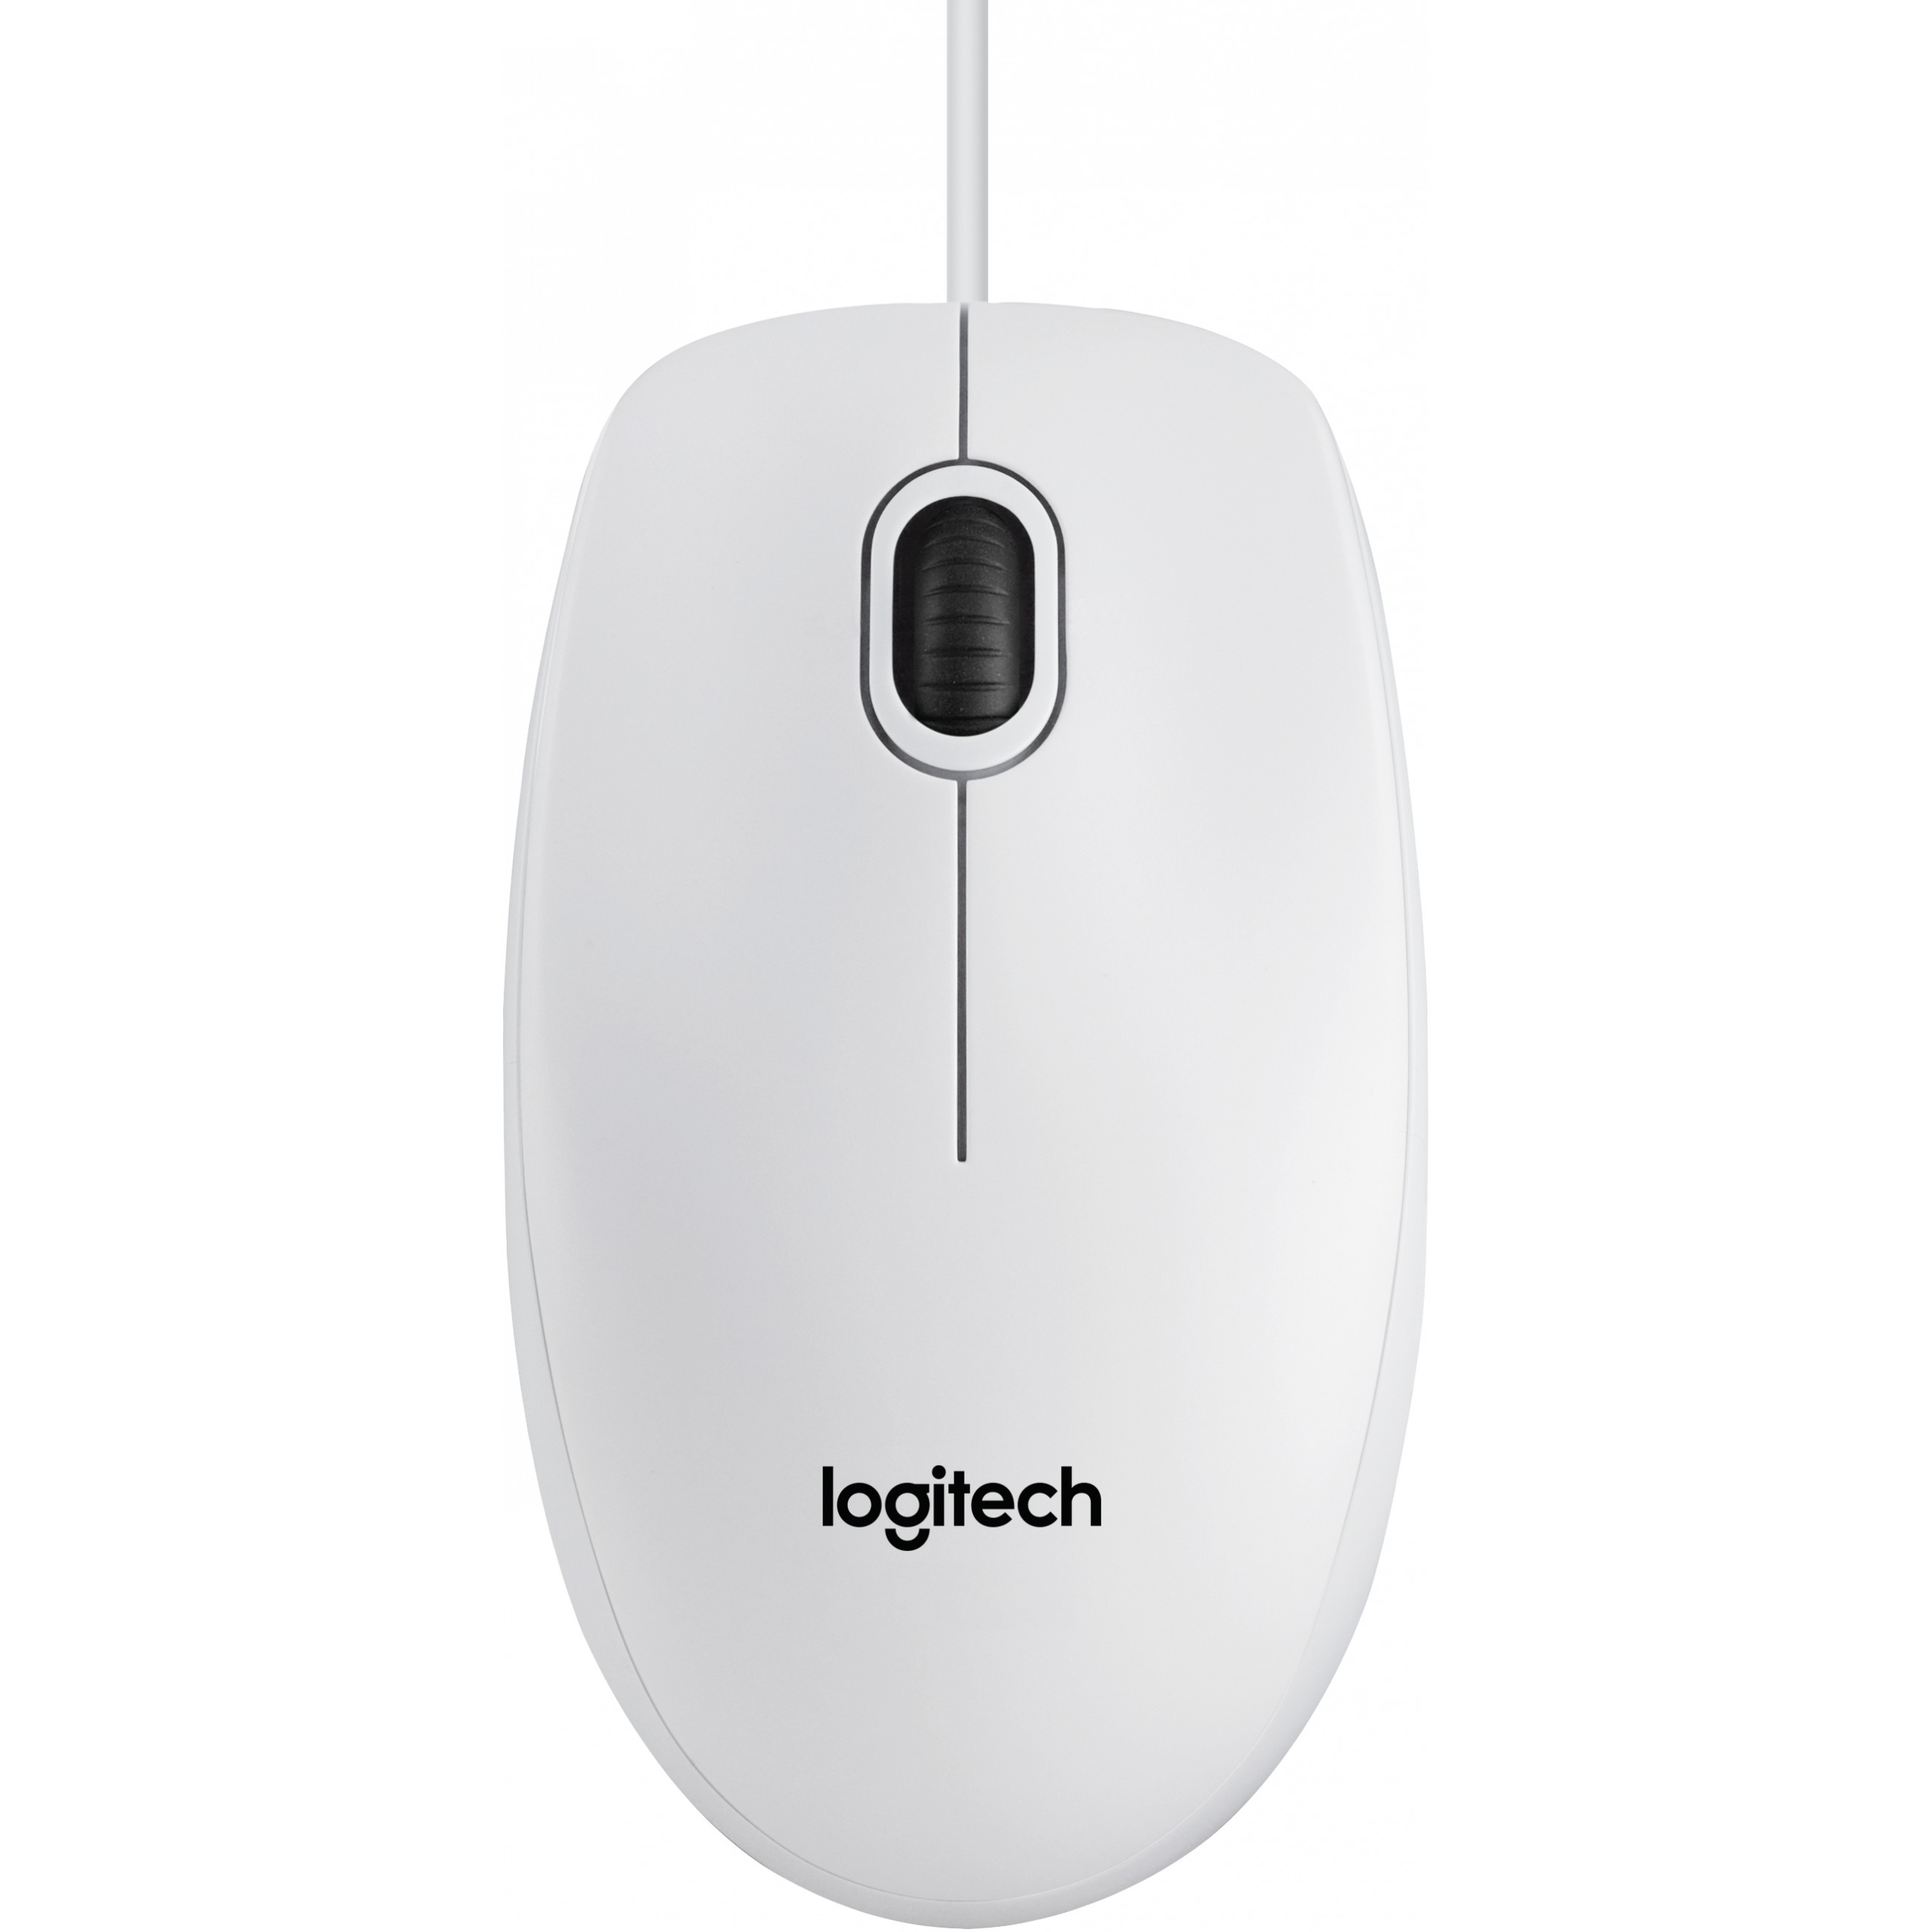 Logitech B100 Optical Usb f/ Bus mouse